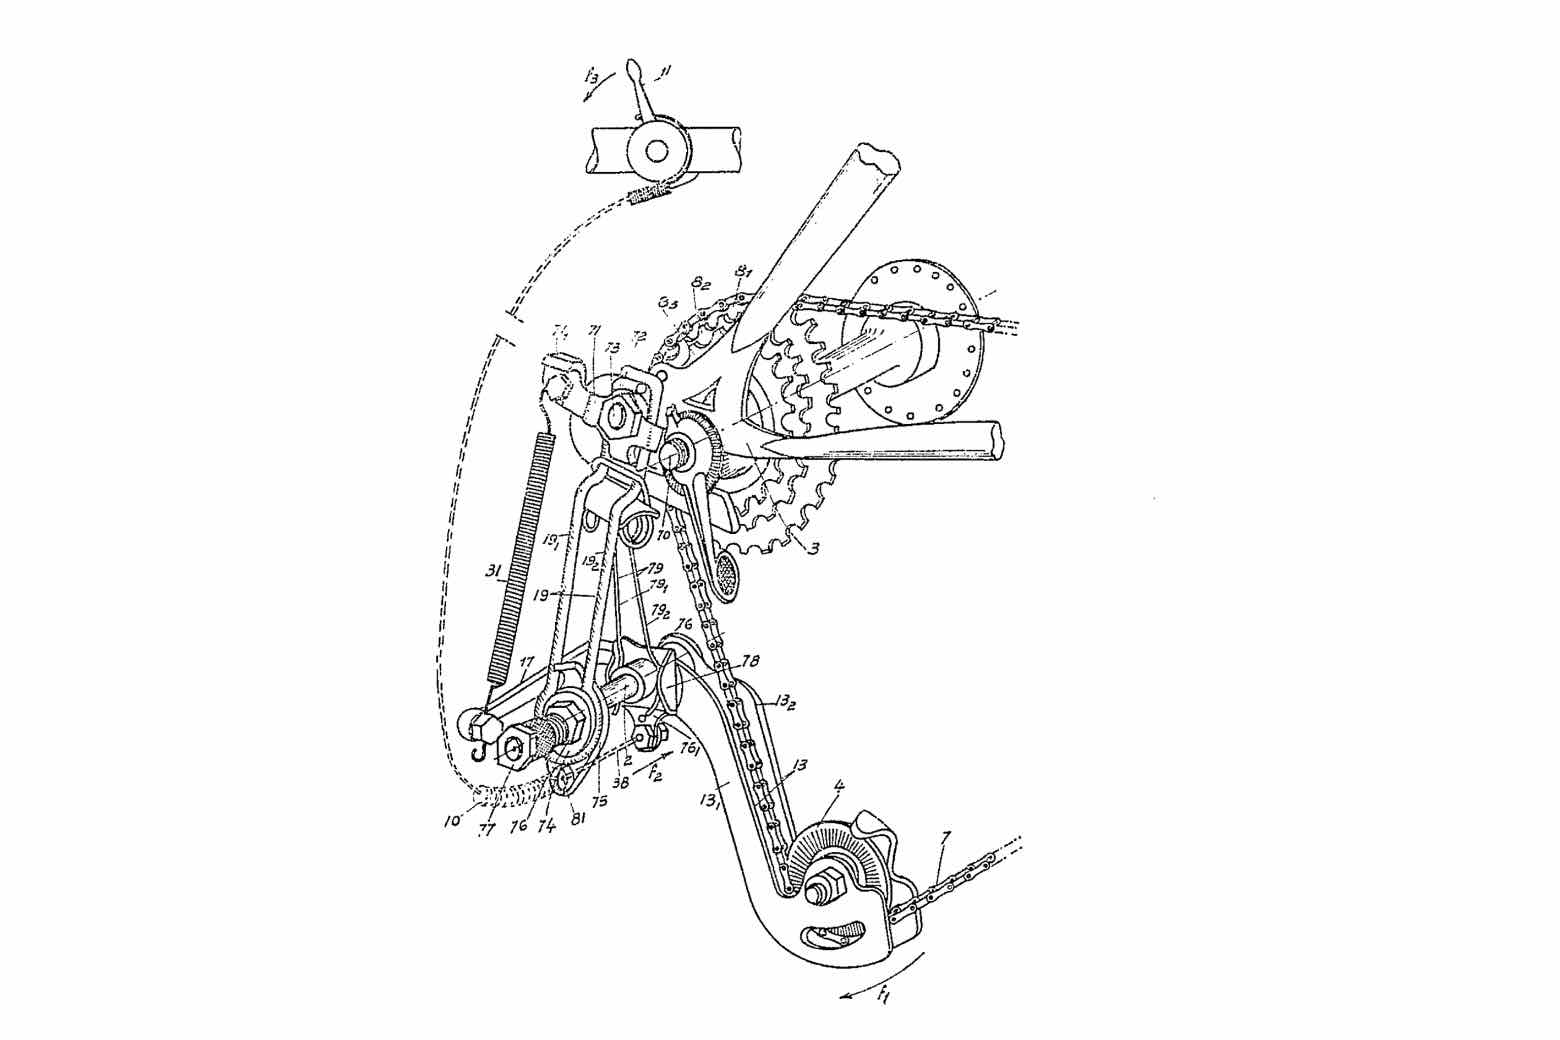 French Patent 923,764 - Huret main image